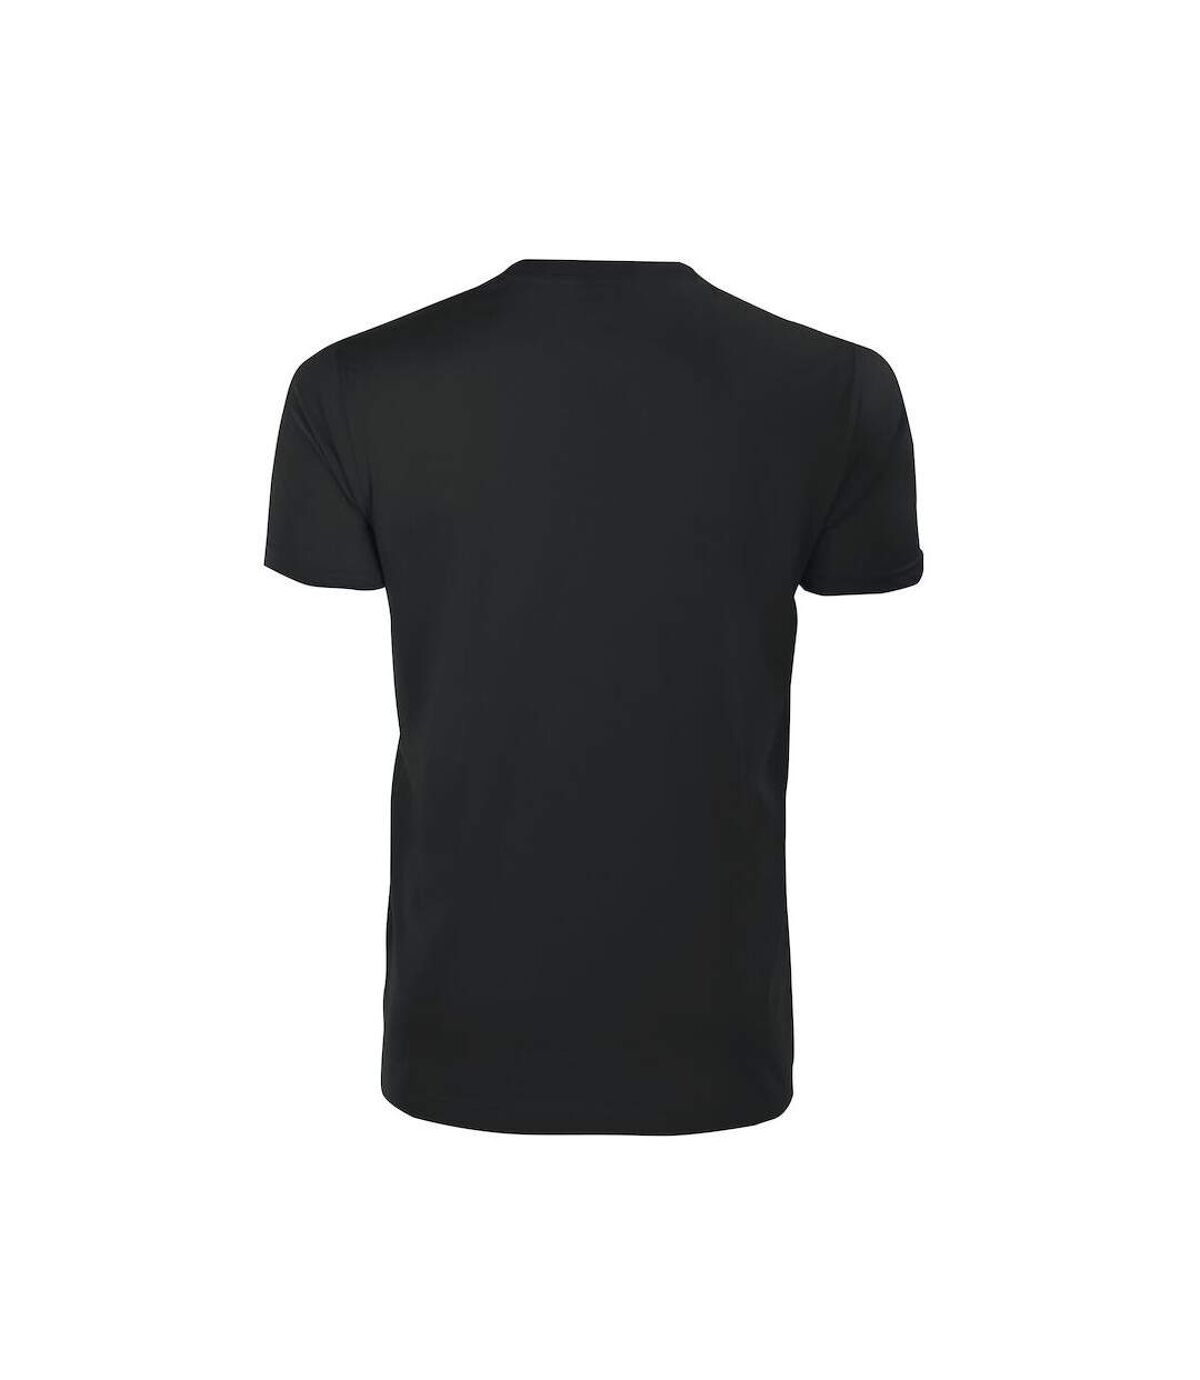 Projob - T-shirt - Homme (Noir) - UTUB294